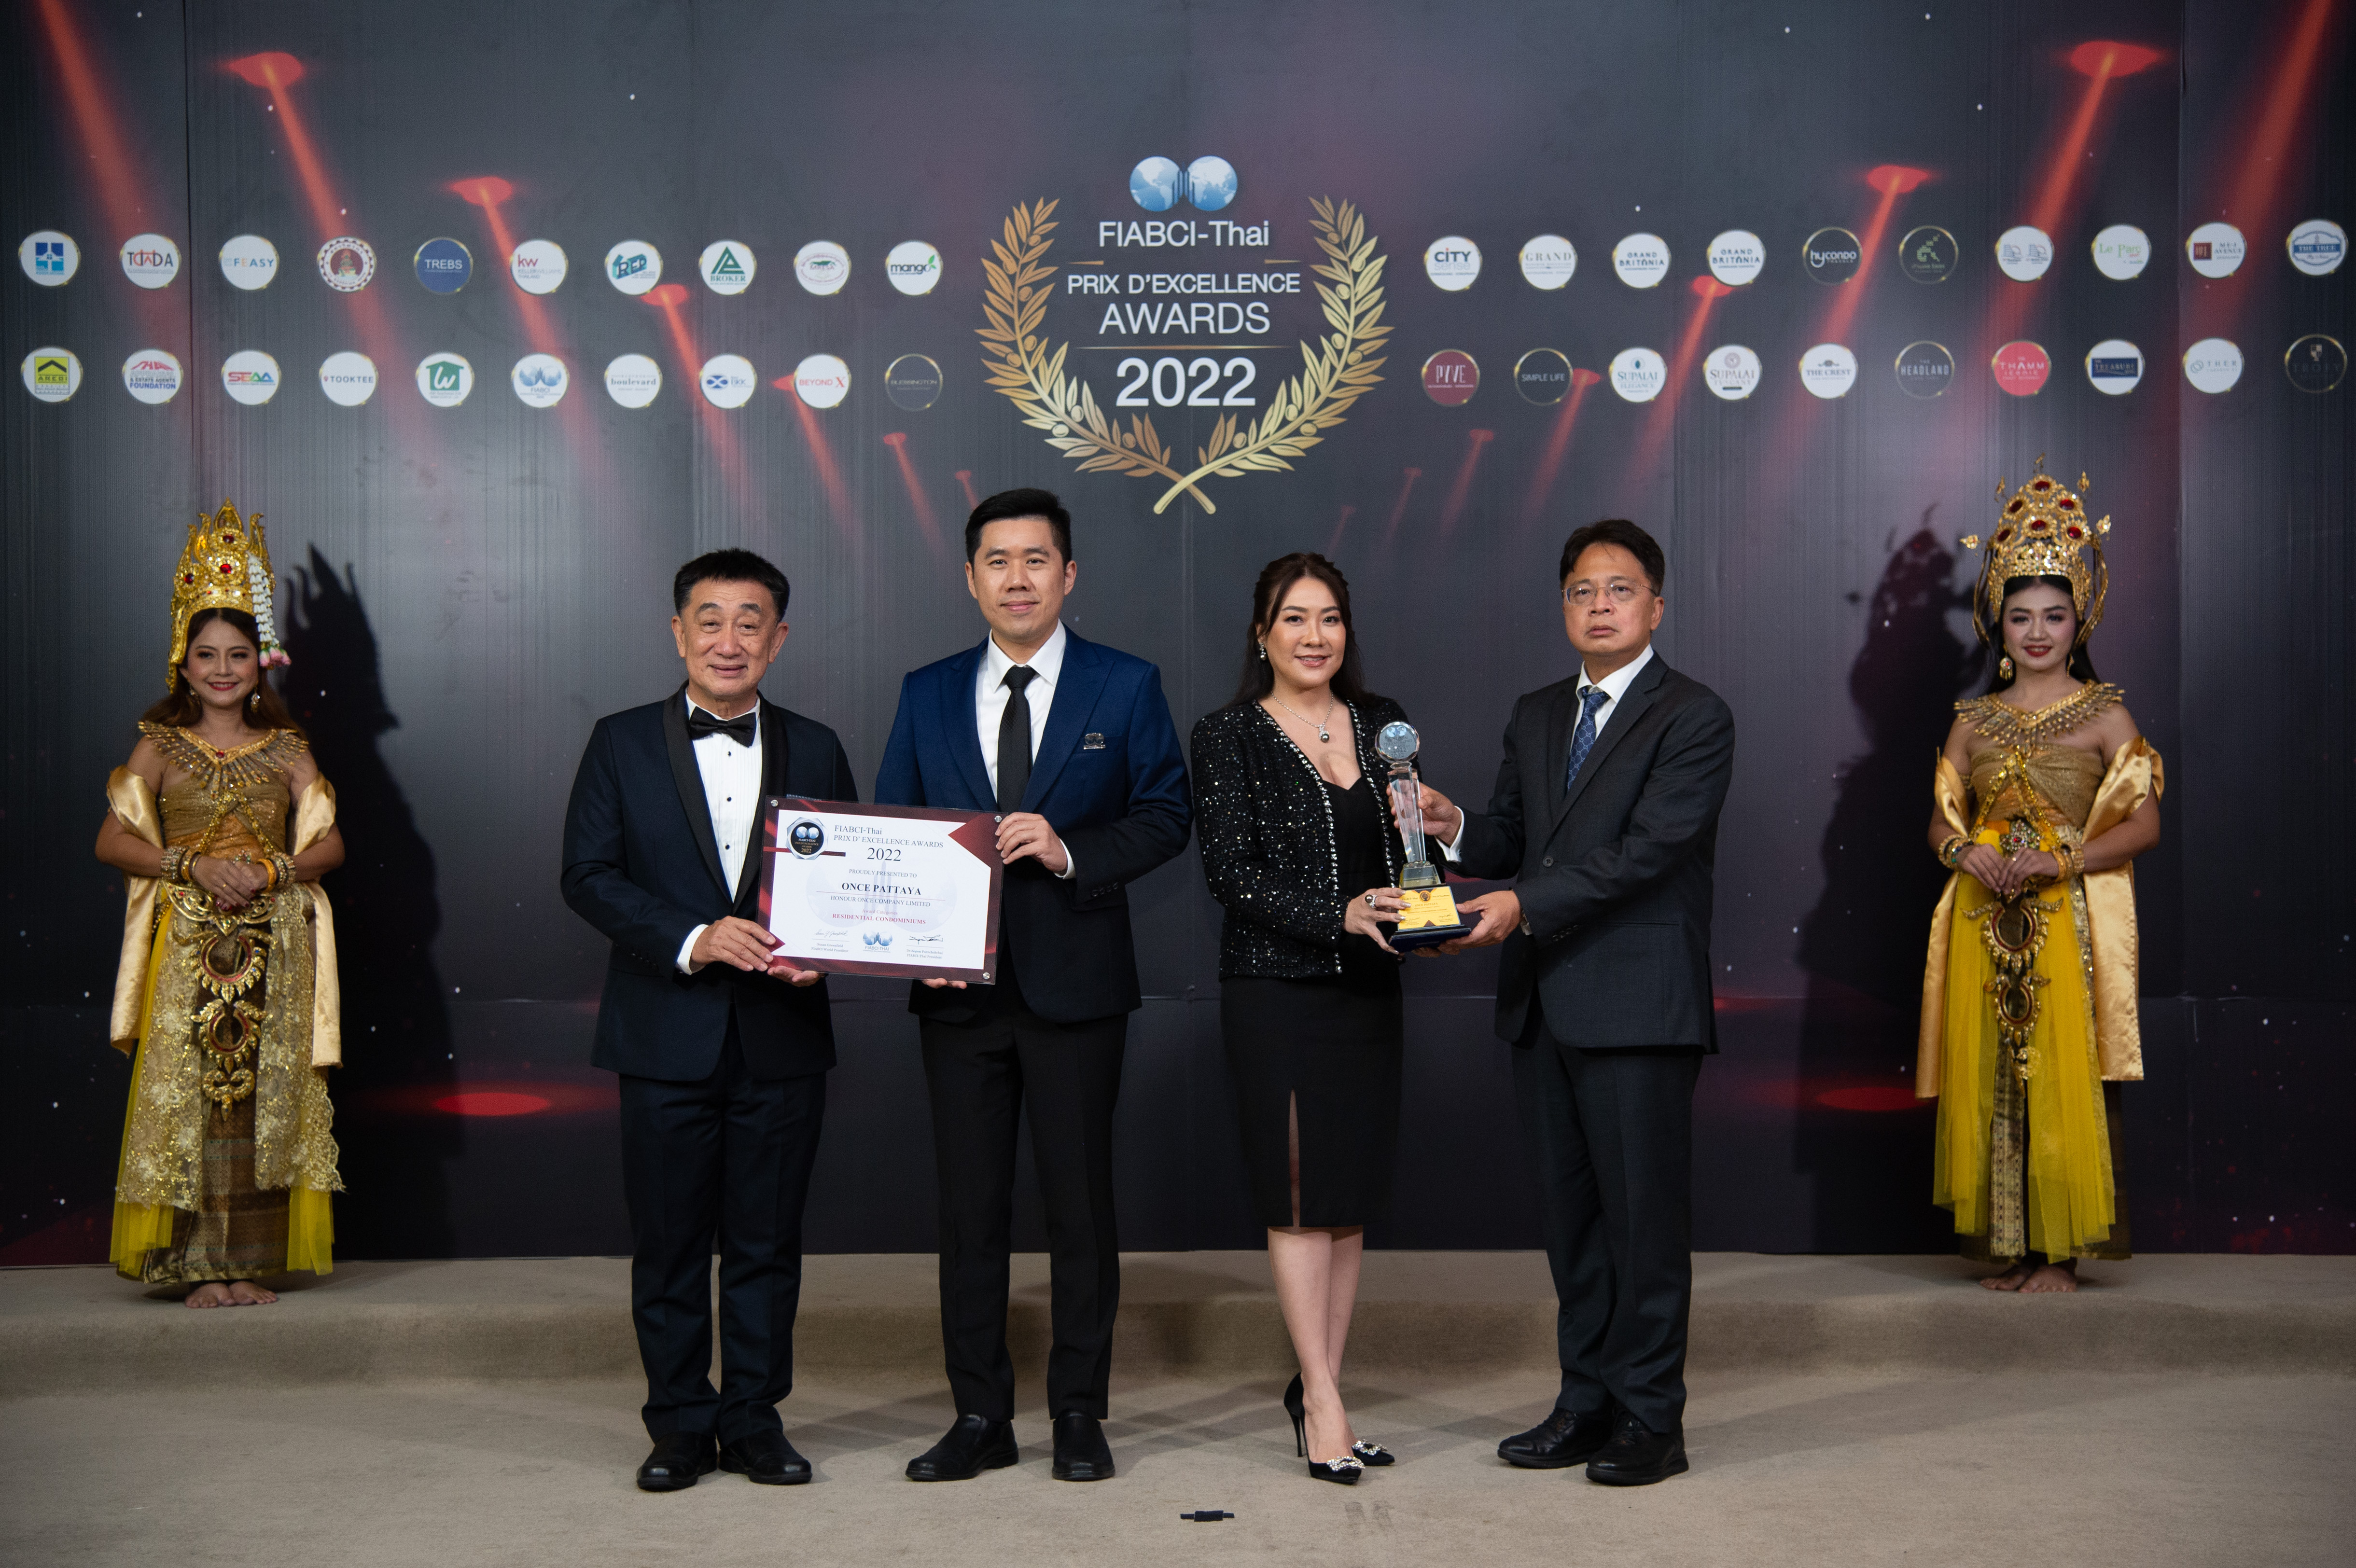 ONCE PATTAYA: FIABCI-Thai Prix D’Excellence Award 2022